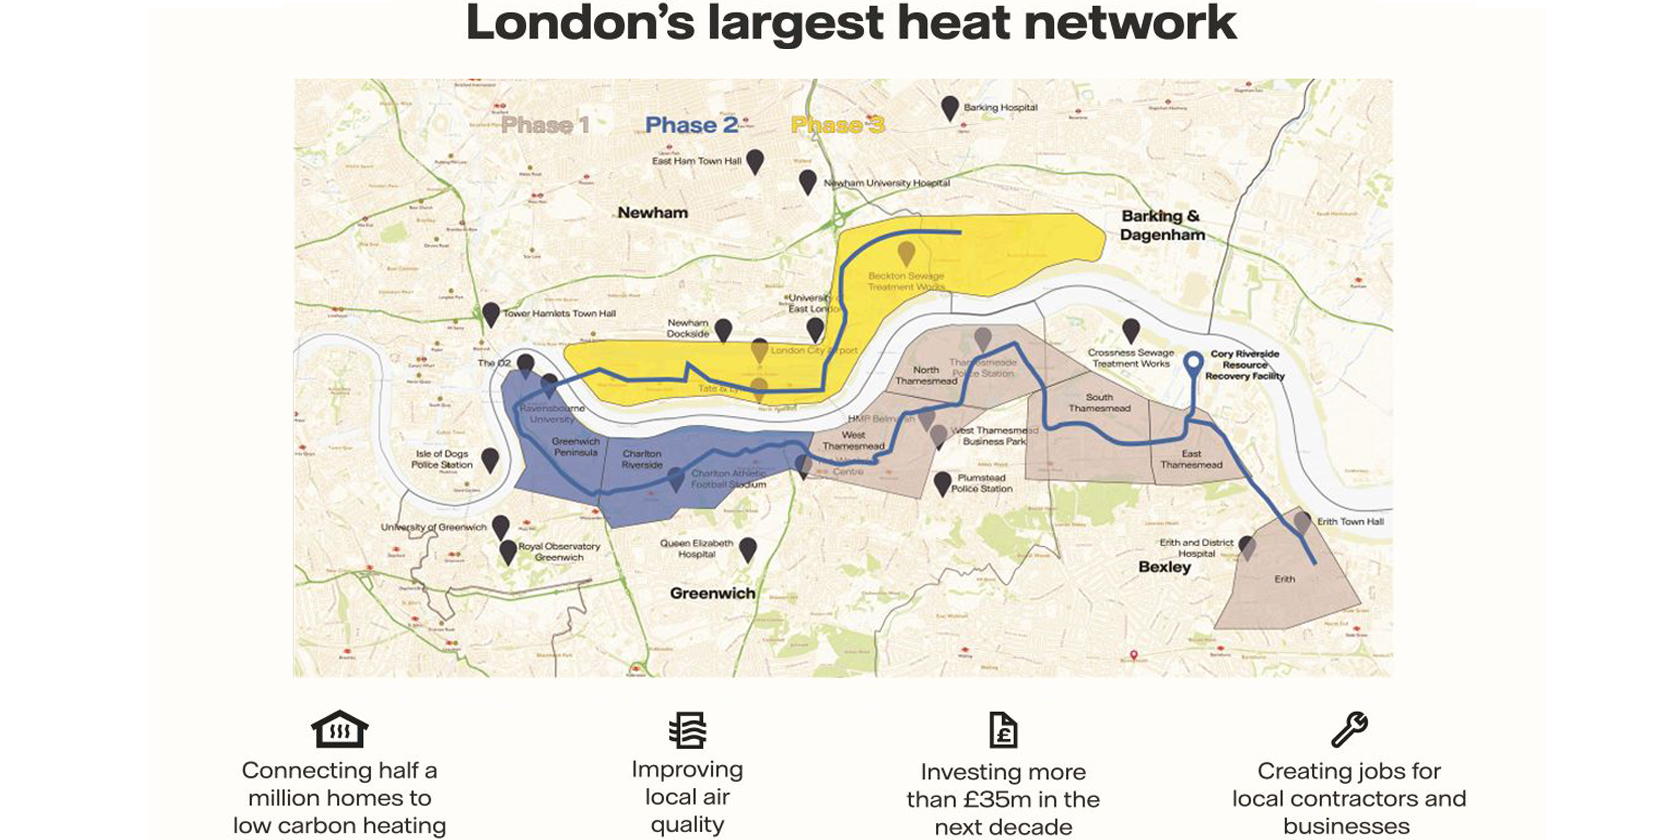 london-heat-network-infographic_2x1.jpg